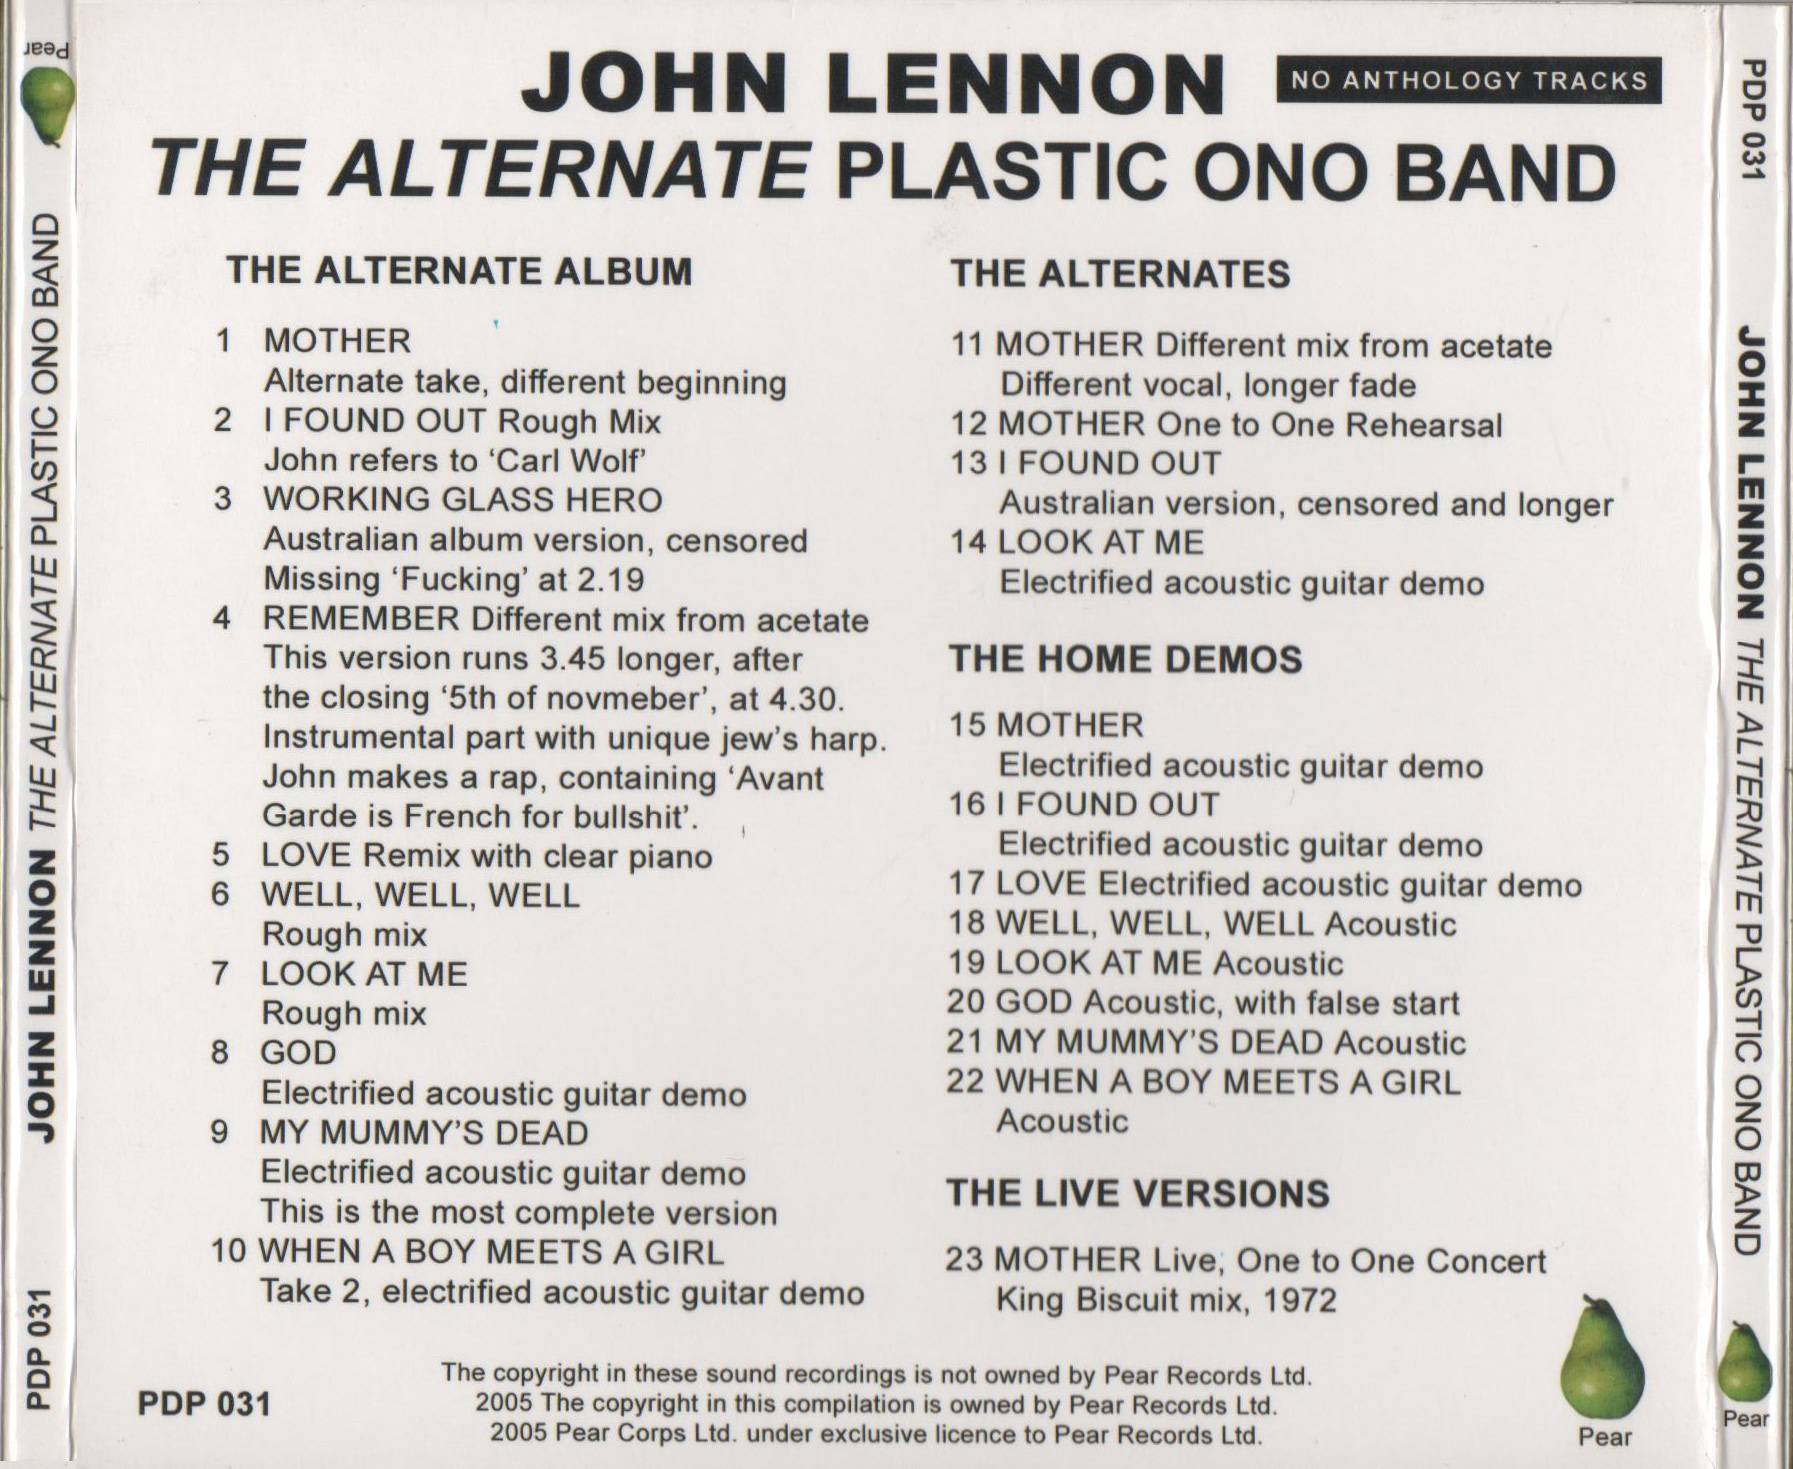 JohnLennon-AlternatePlasticOnoBand (1).jpg